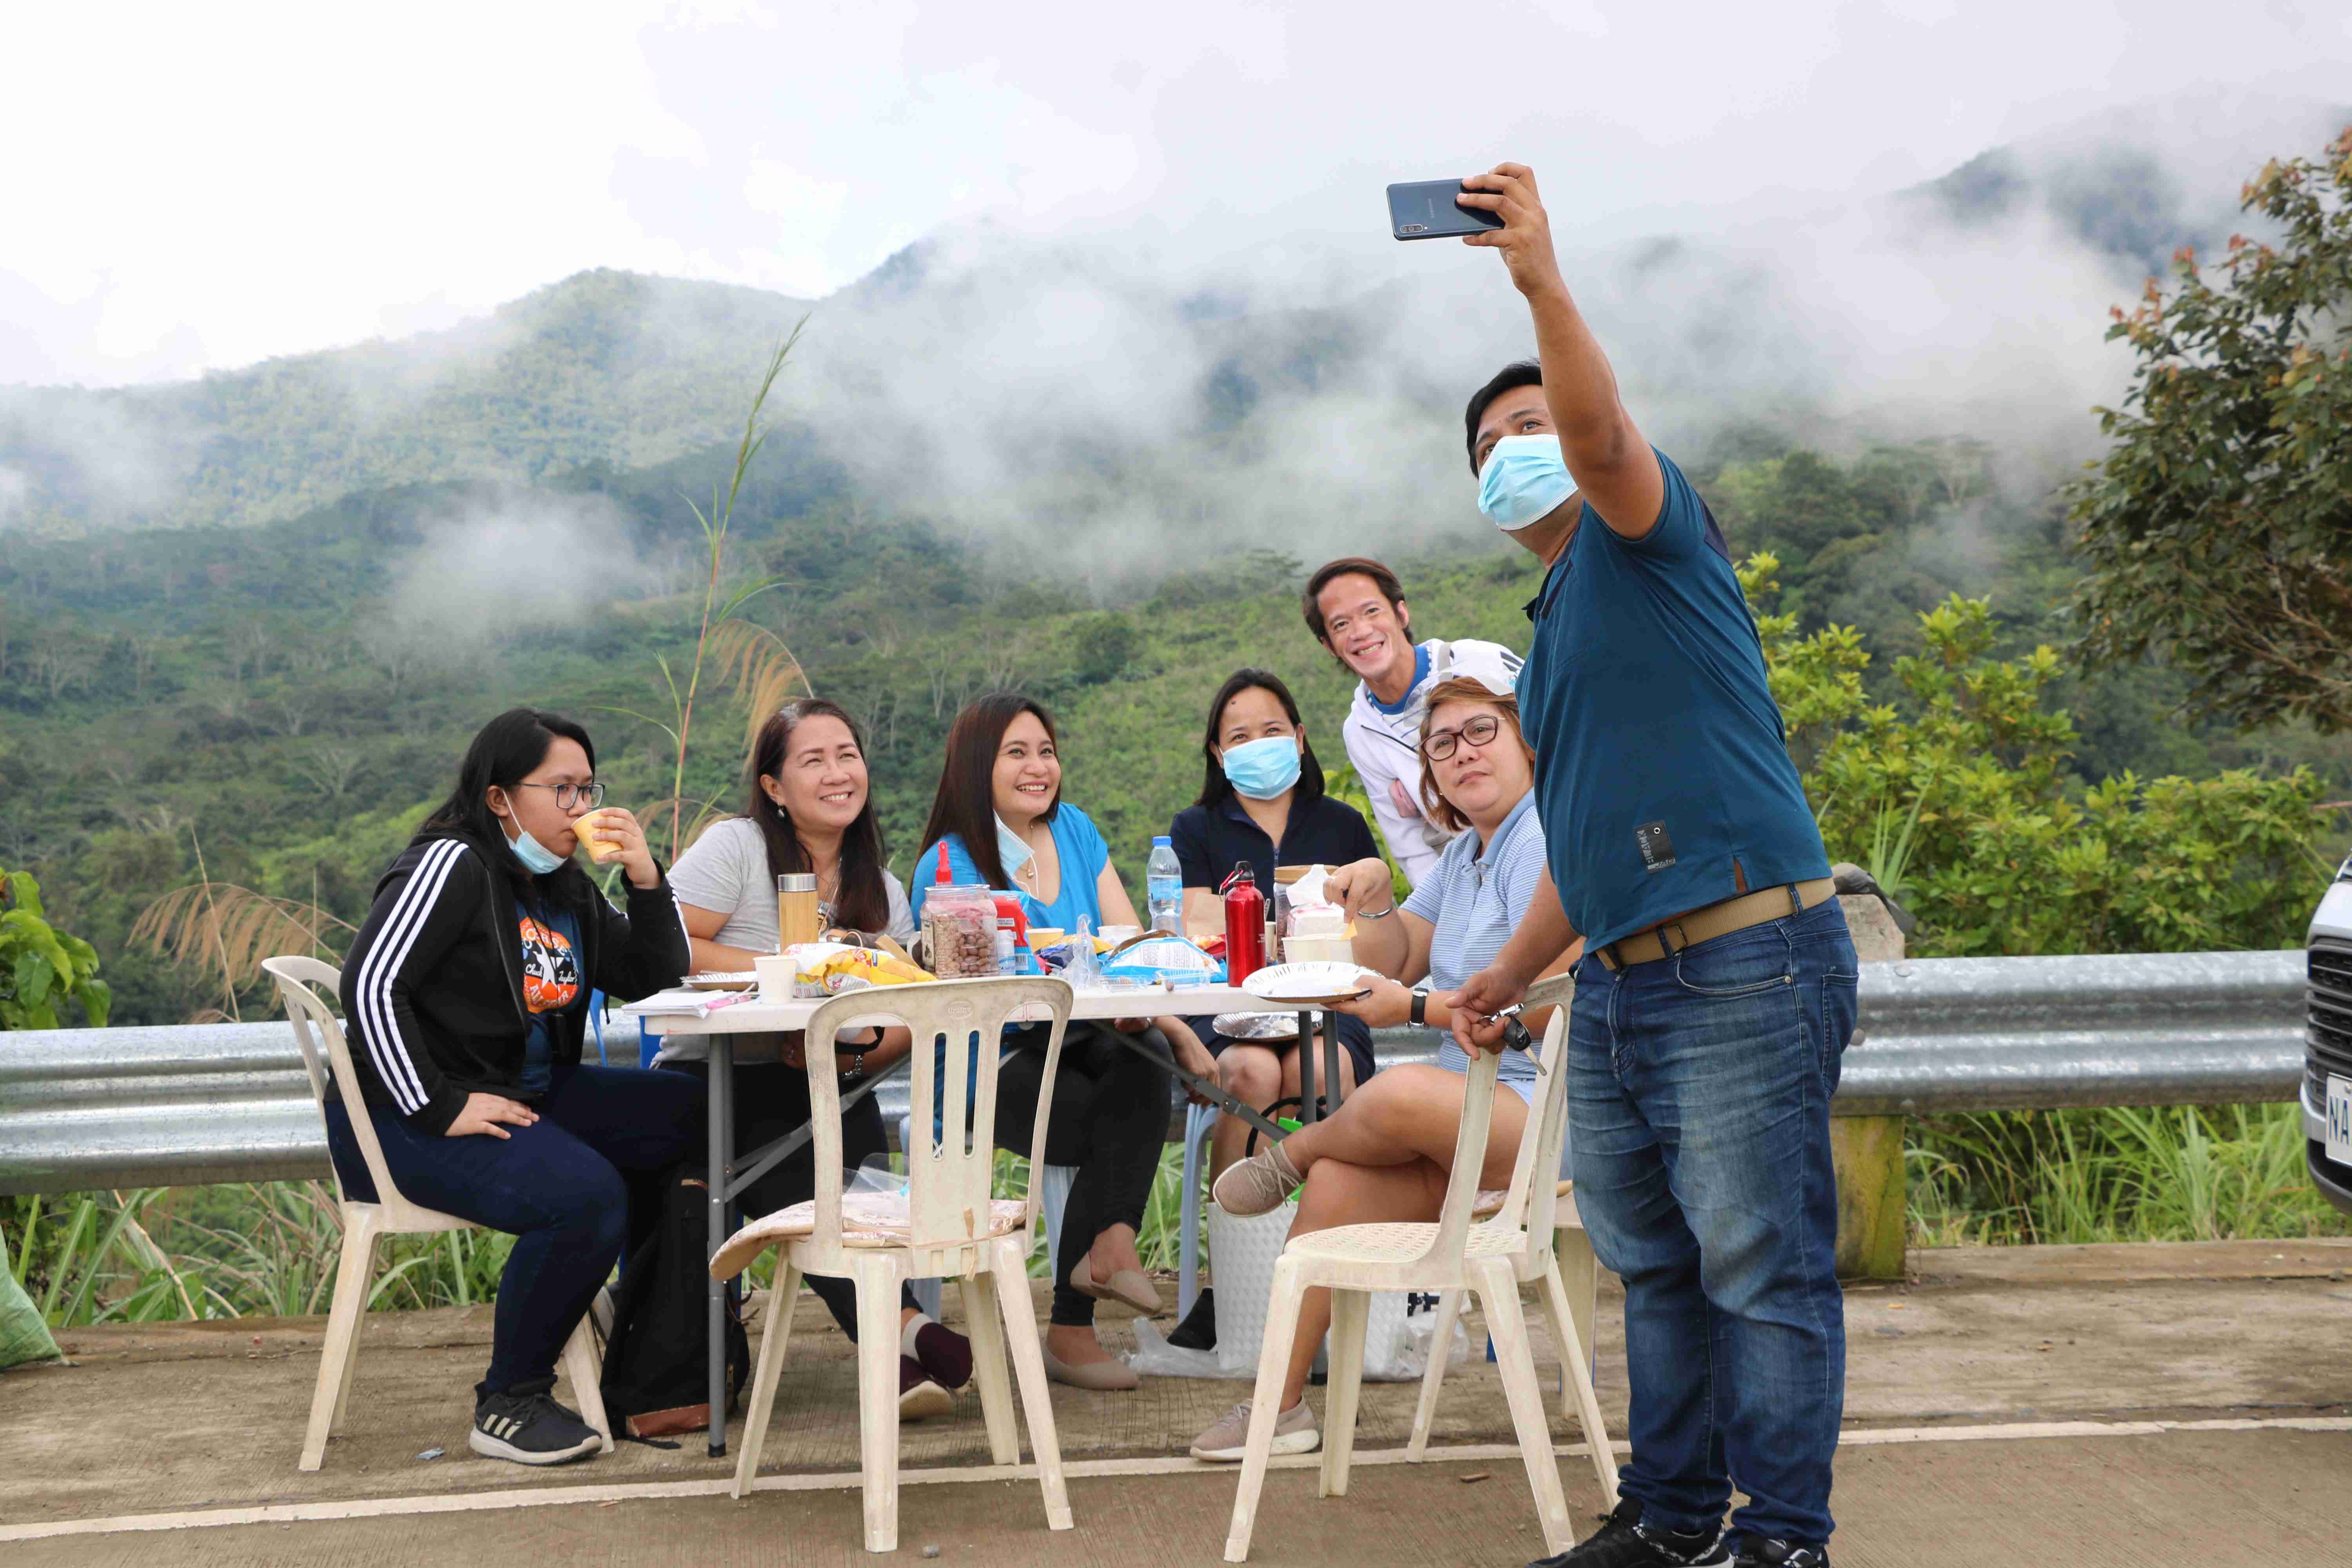 Mobile coffee shop brings people to Mindanao’s Mount Malindang